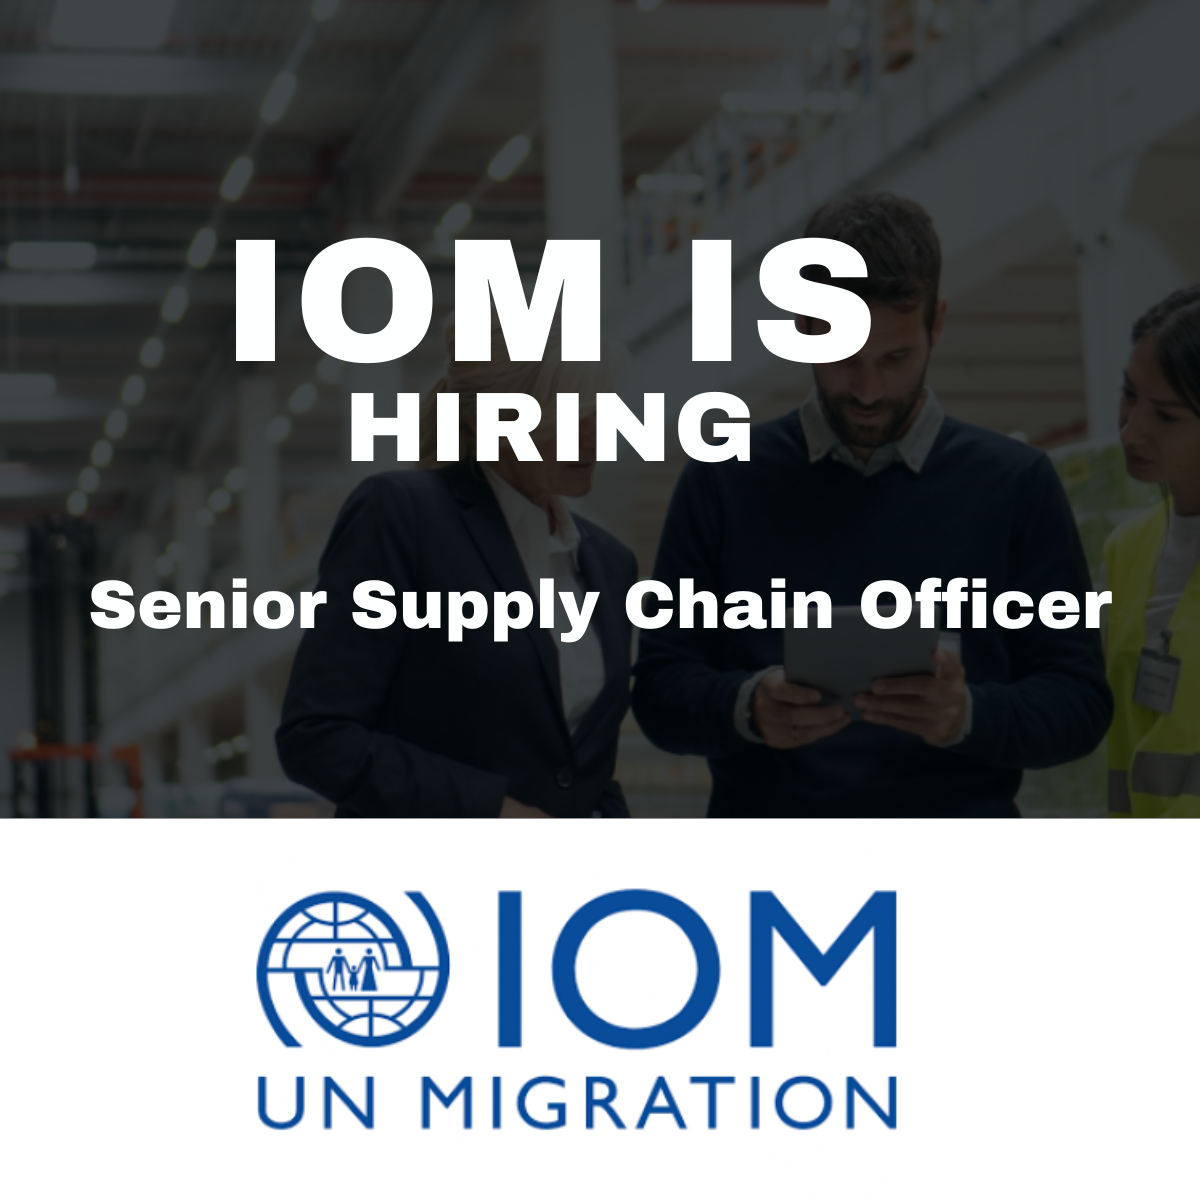 The International Migration Organization (IOM) is hiring a Senior Supply Chain Officer : APPLY